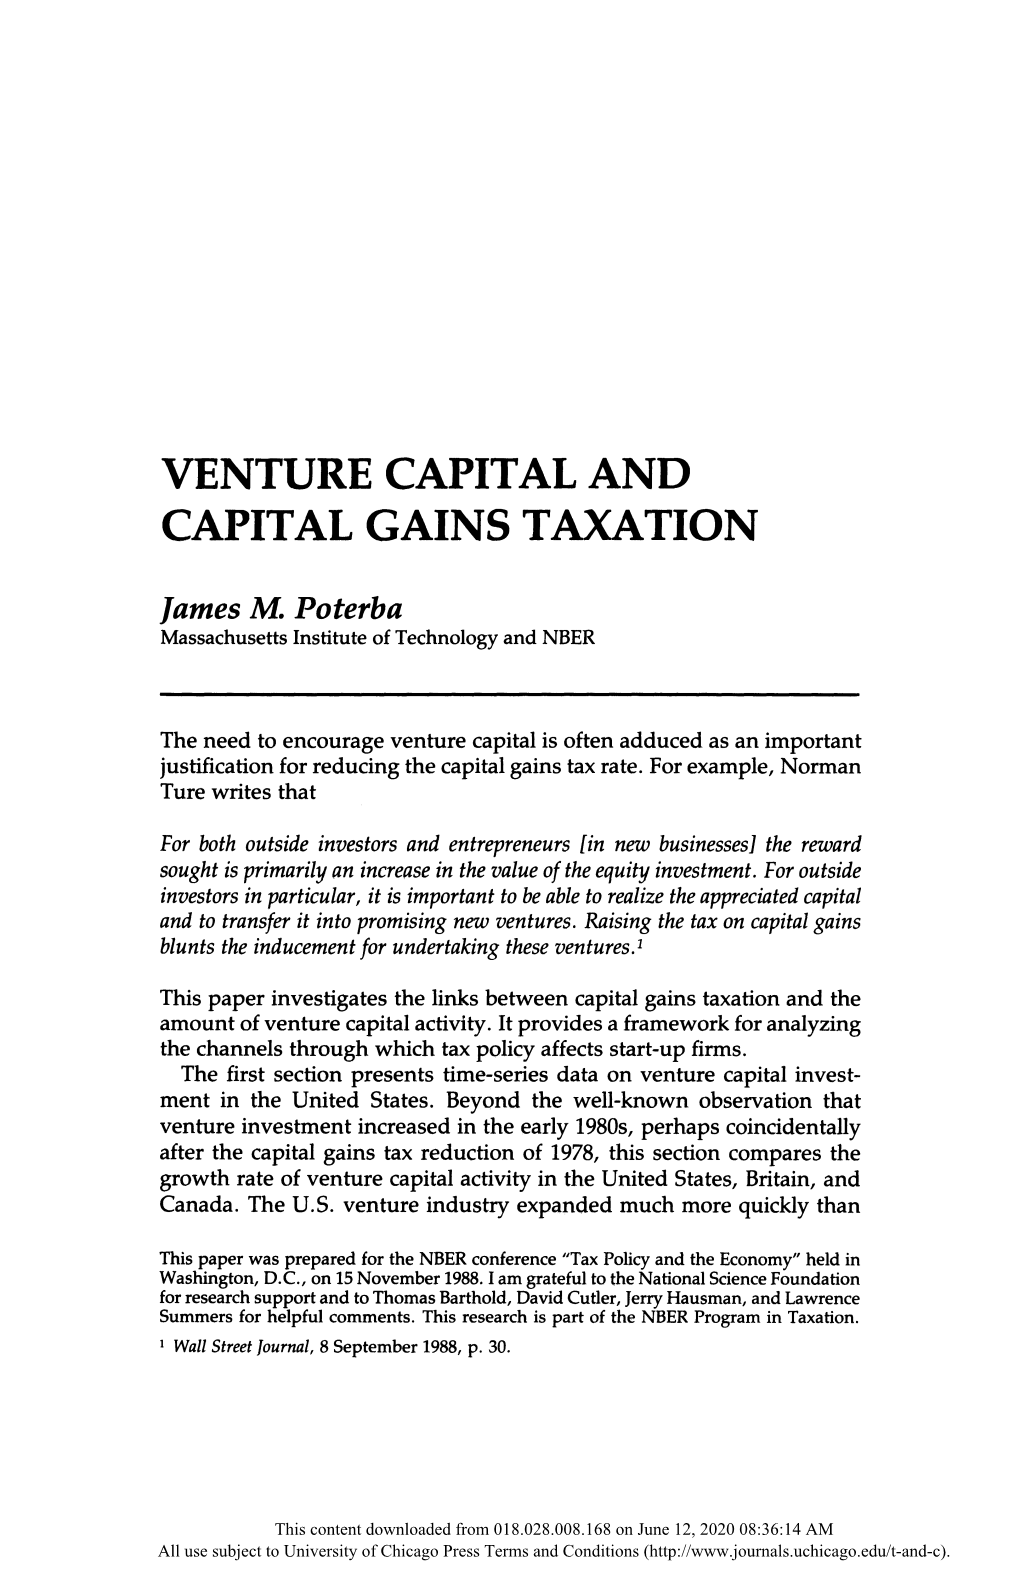 Venture Capital and Capital Gains Taxation